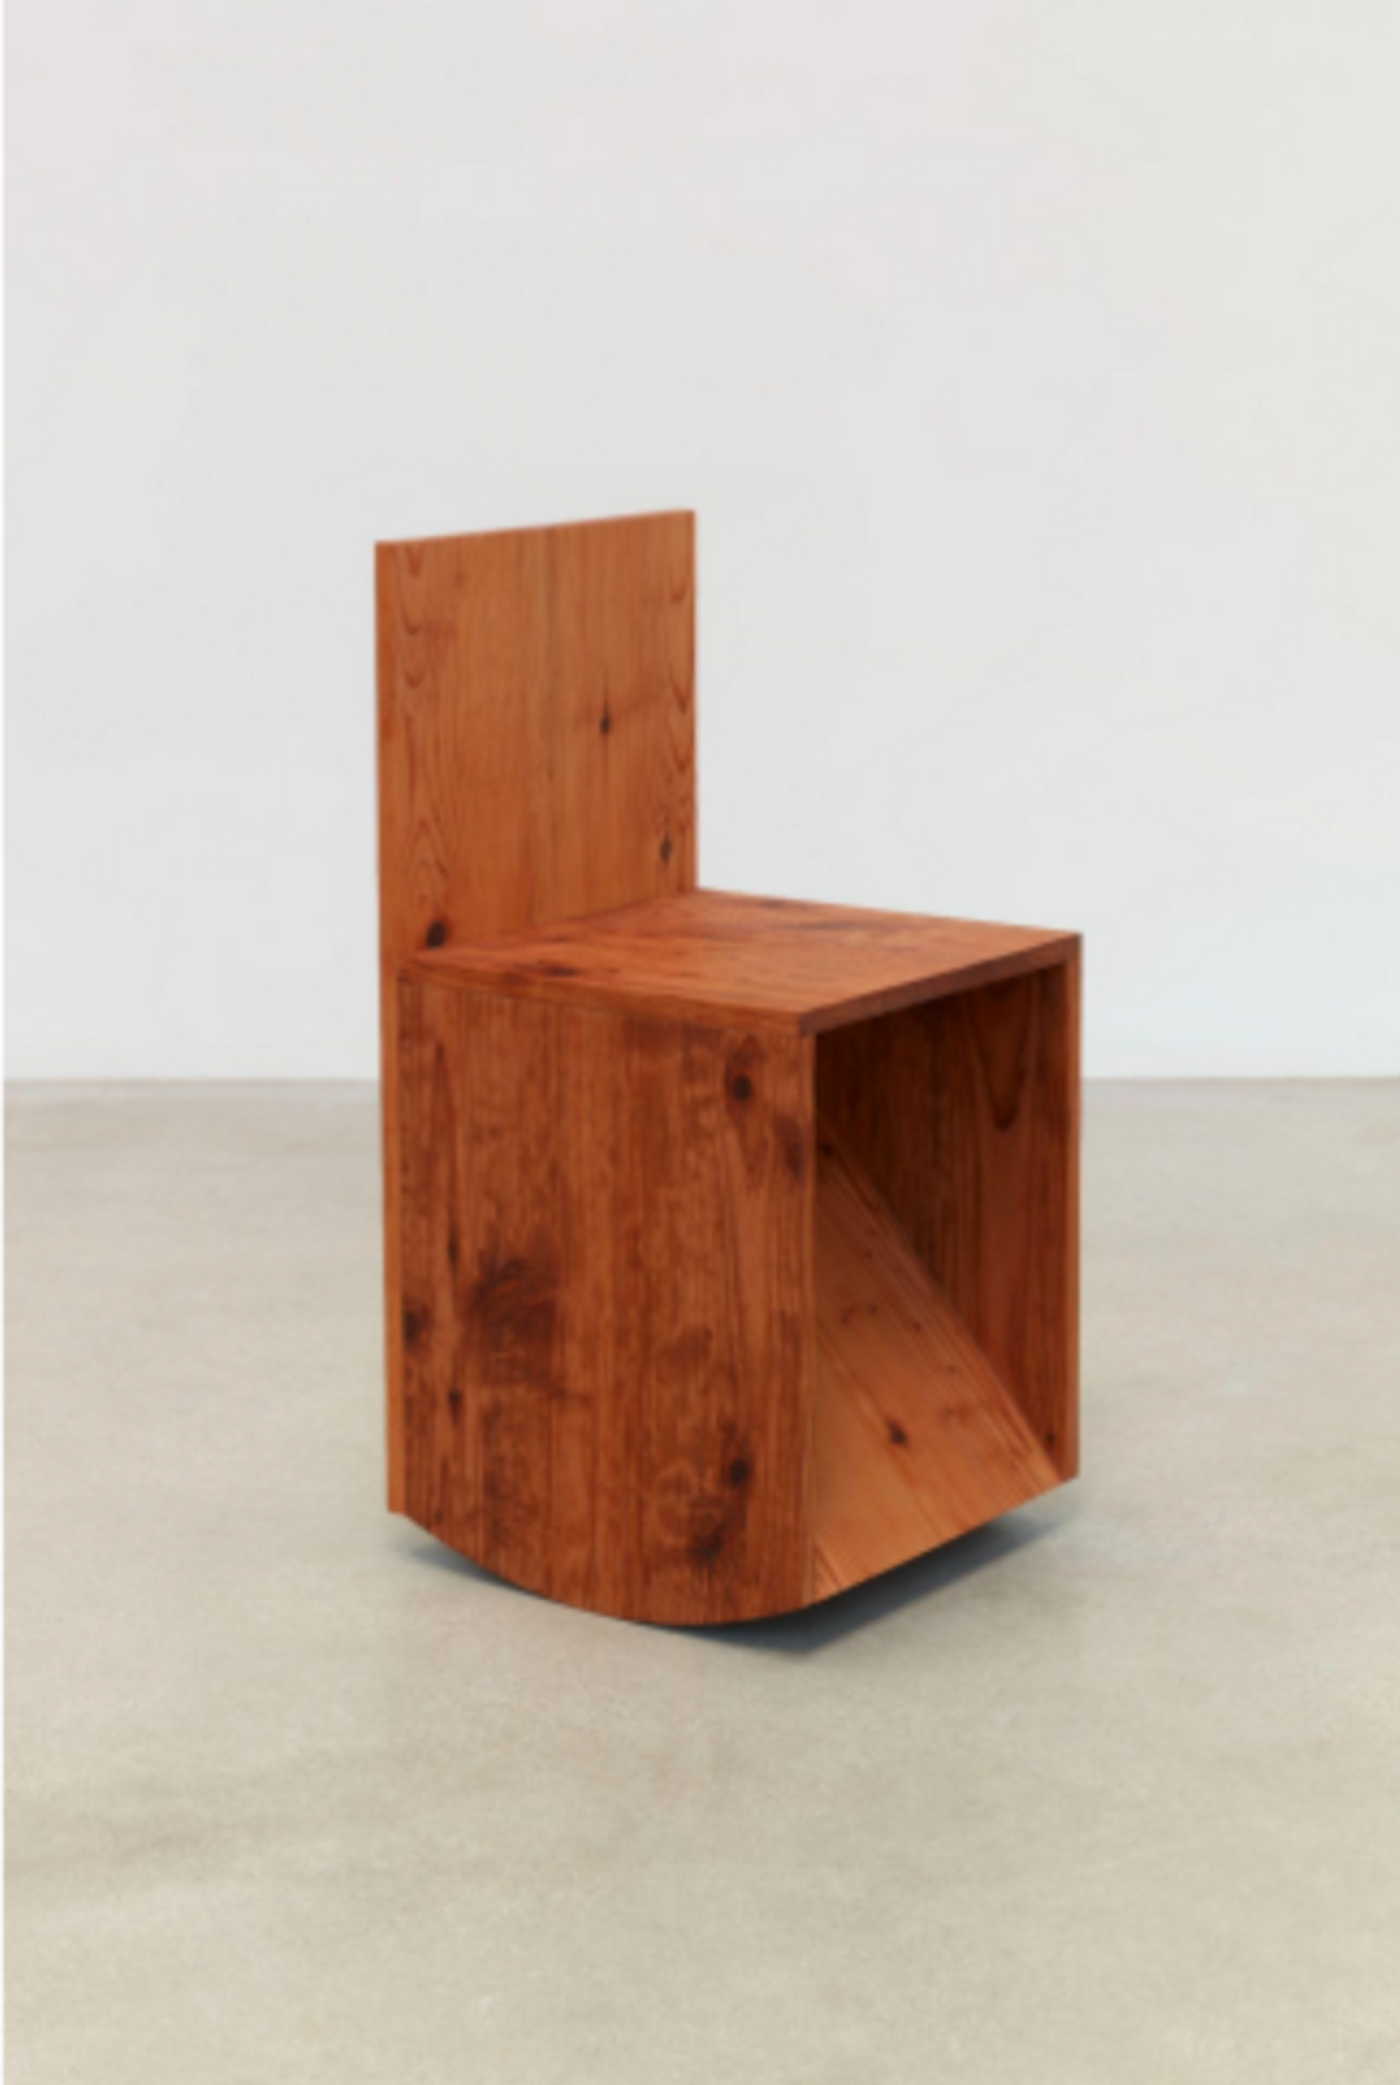 Image of Forward Slant Rocking Chair 84, 2021: Redwood, steel